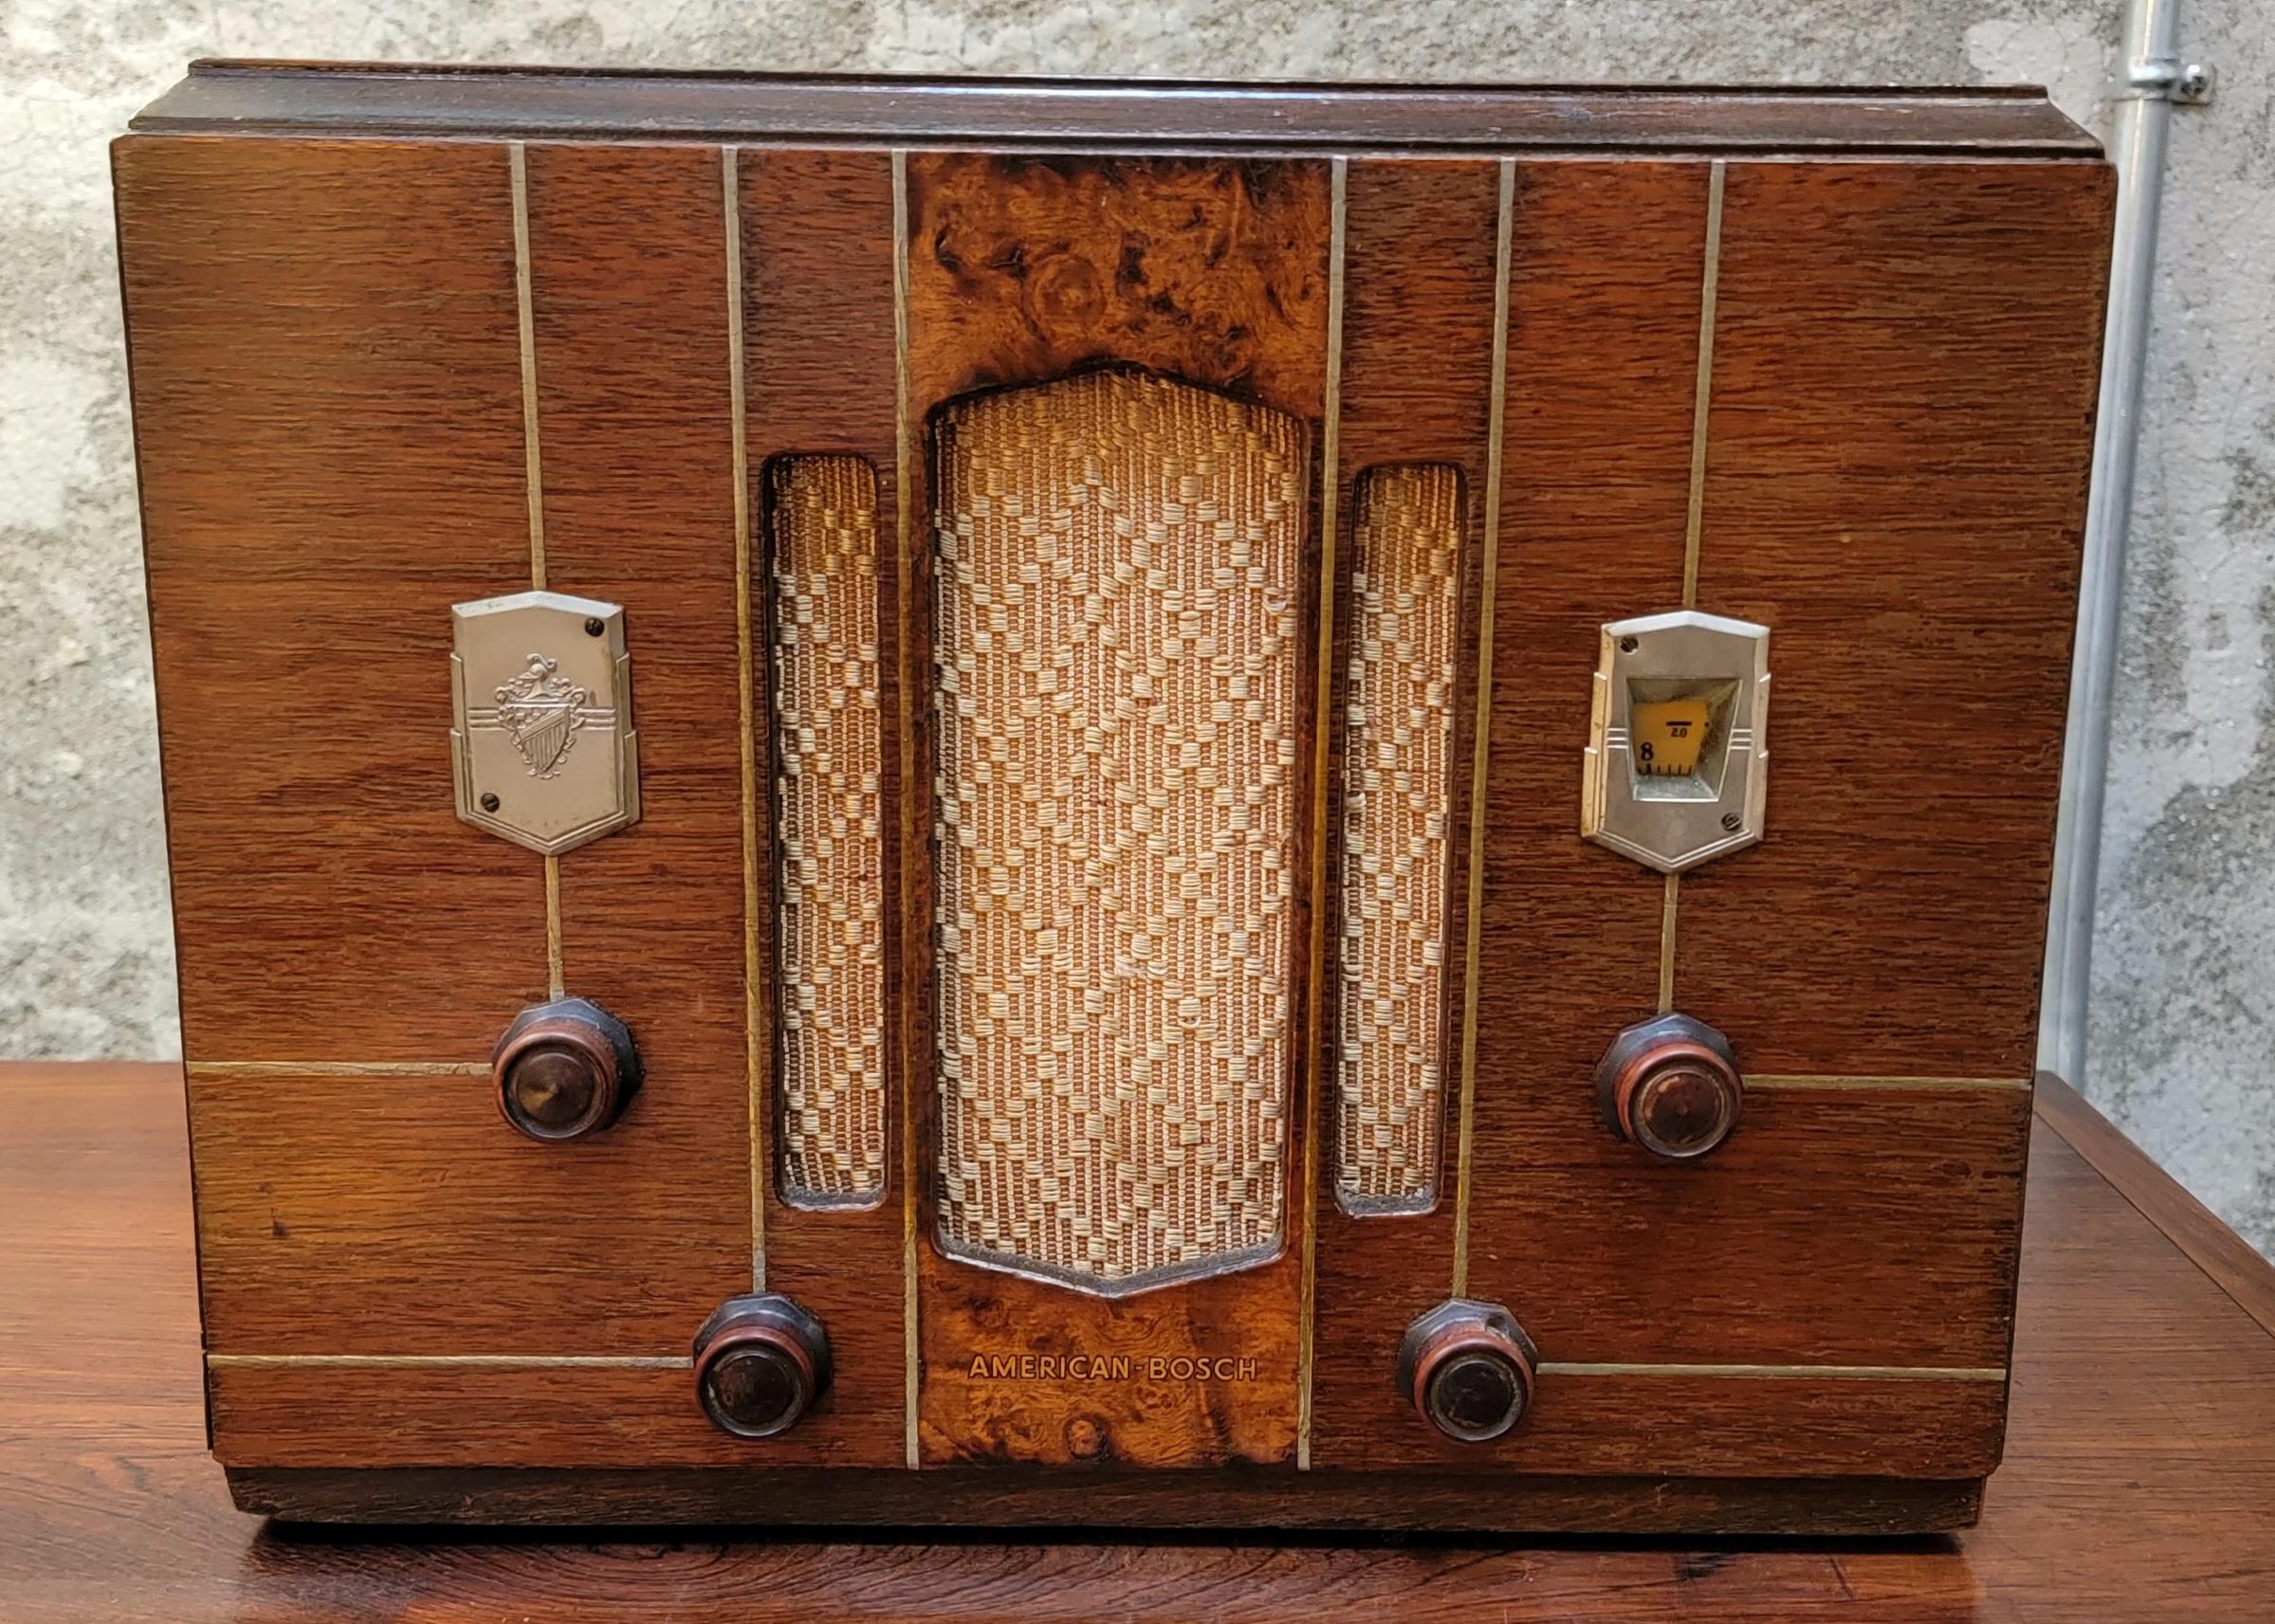 Classic Art Deco AM radio by United American Bosch (Magnito Corporation) Springfield Mass. circa. 1935. Restored to original working condition.